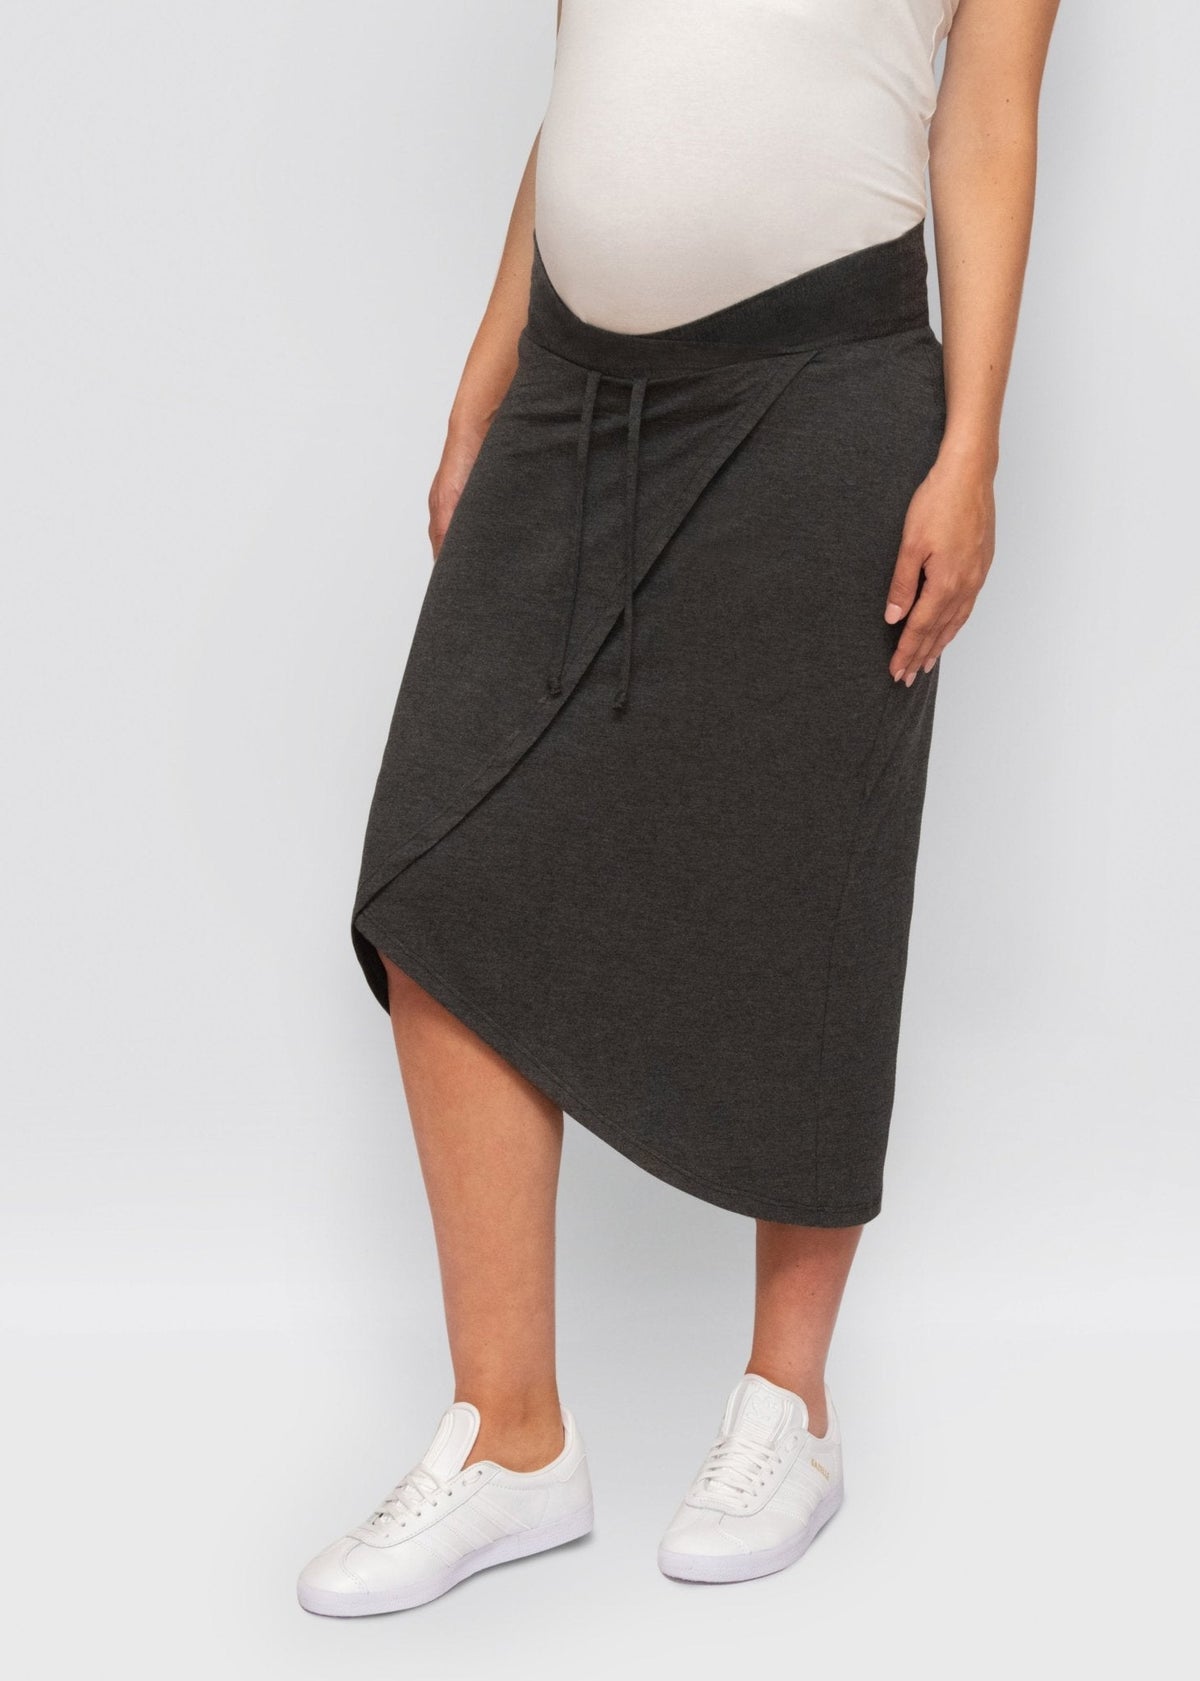 wrap skirt - charcoal - úton: maternity and postpartum essentials